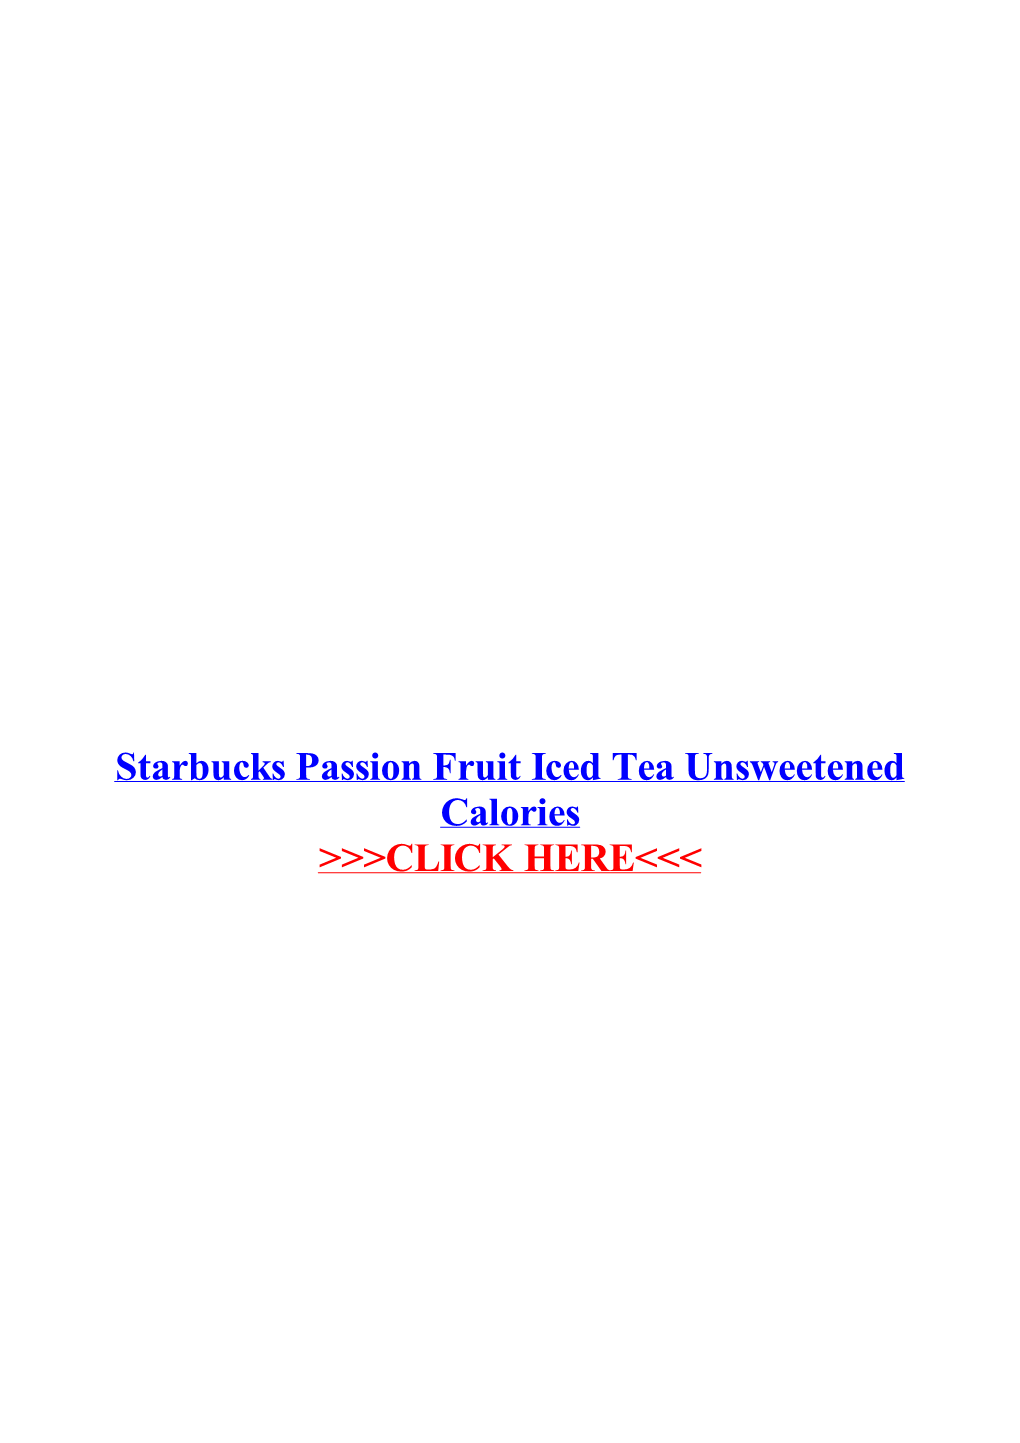 Starbucks Passion Fruit Iced Tea Unsweetened Calories